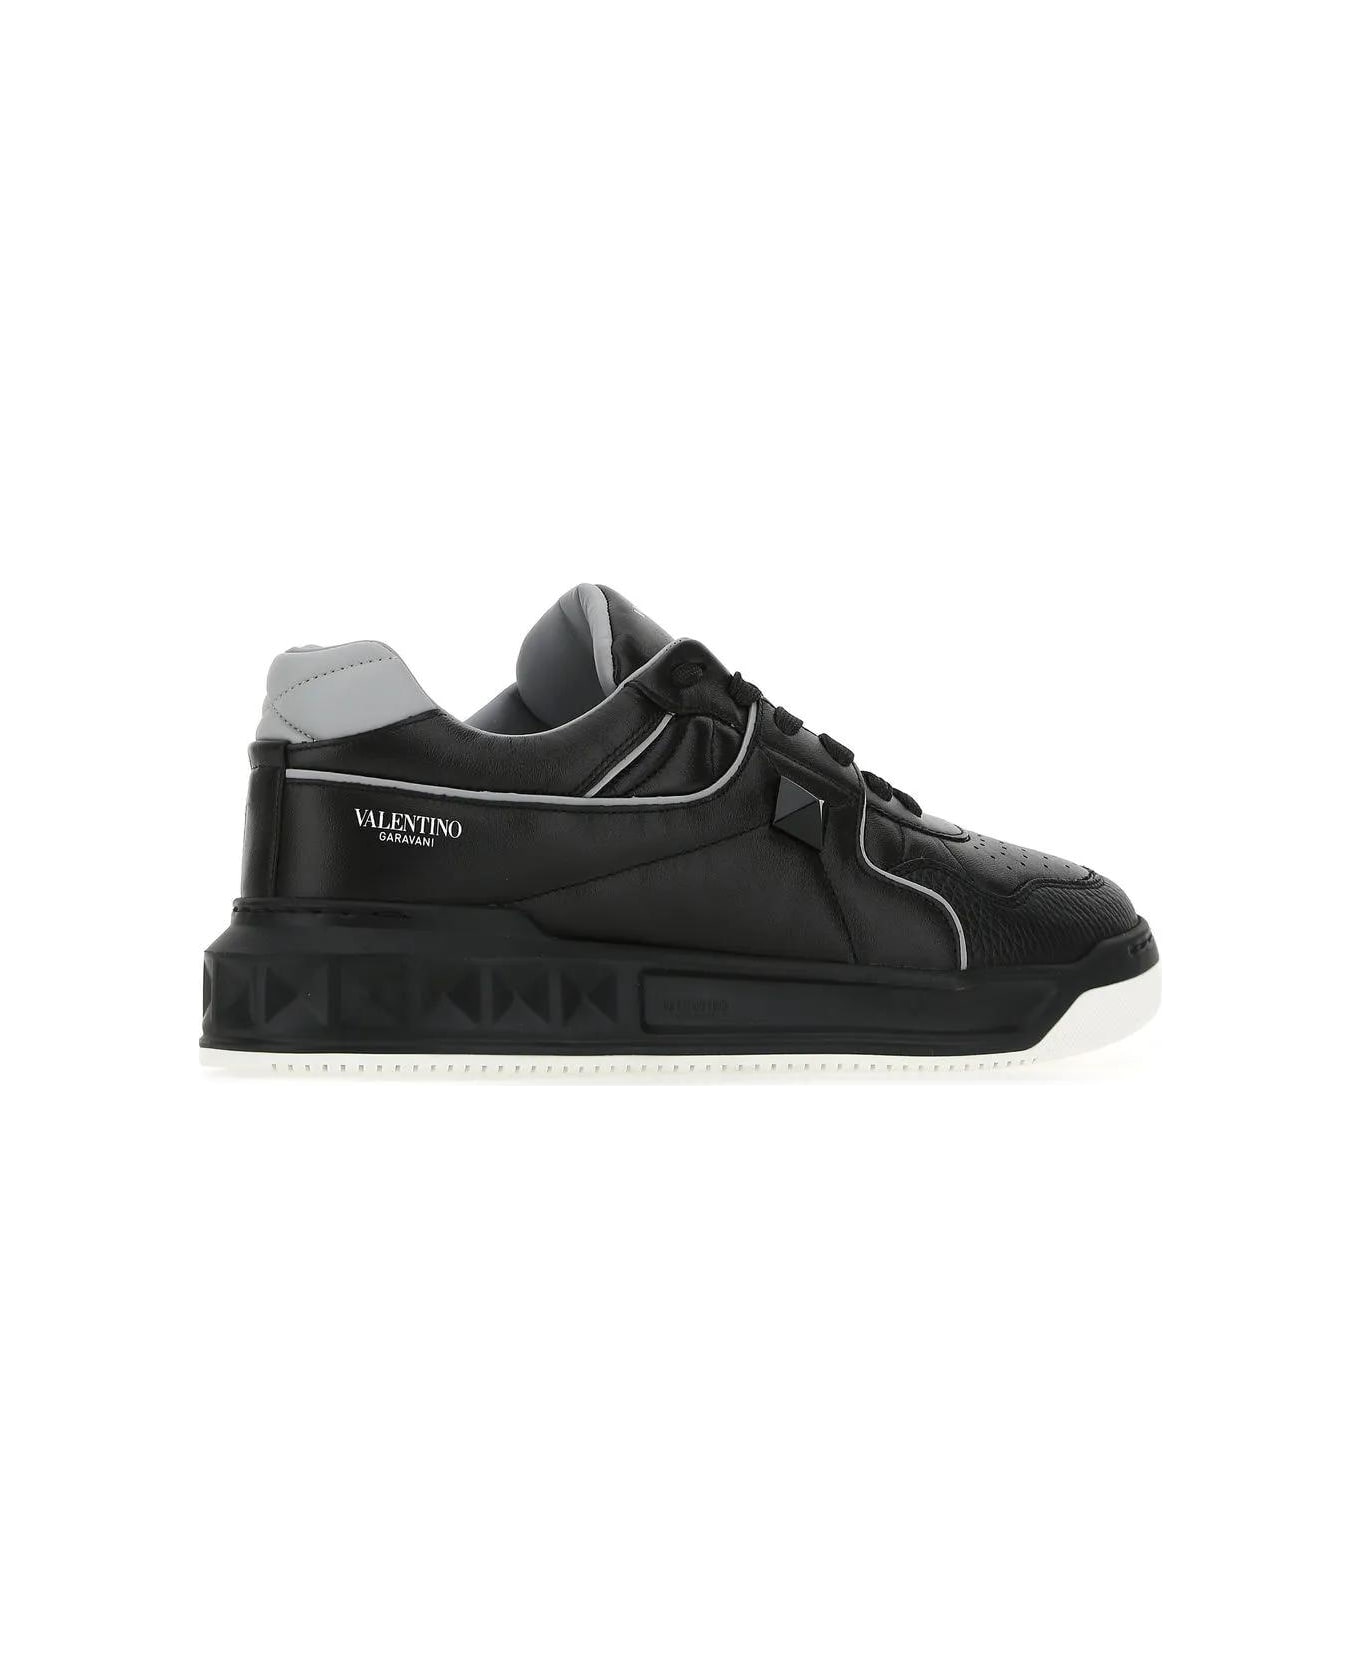 Valentino Garavani Black Nappa Leather One Stud Sneakers - Black スニーカー